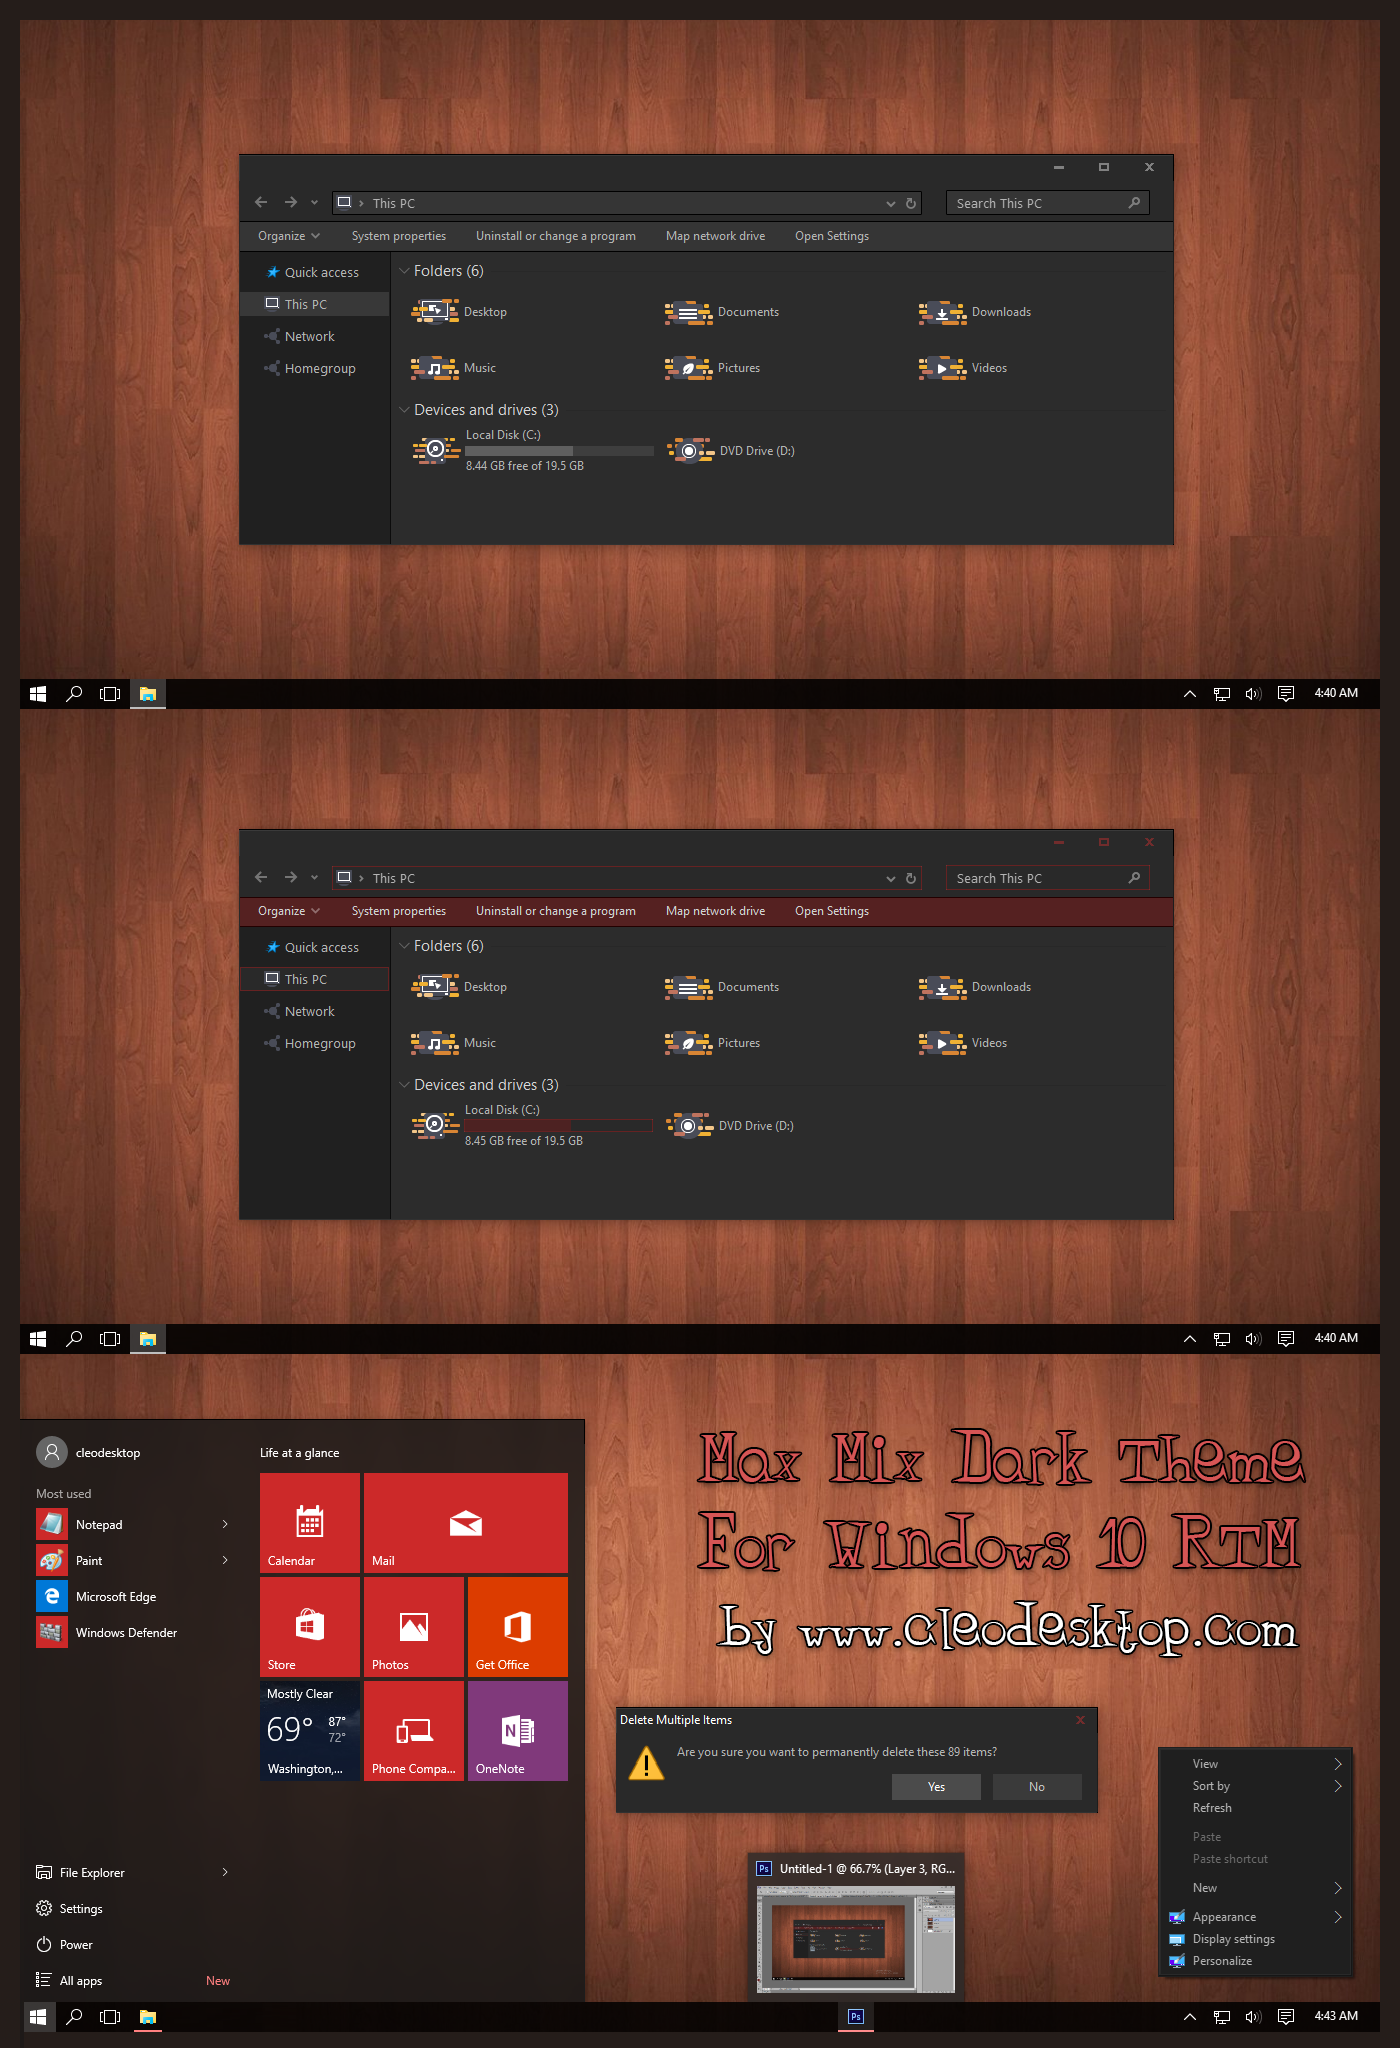 Max Mix Dark Theme For Windows 10 RTM